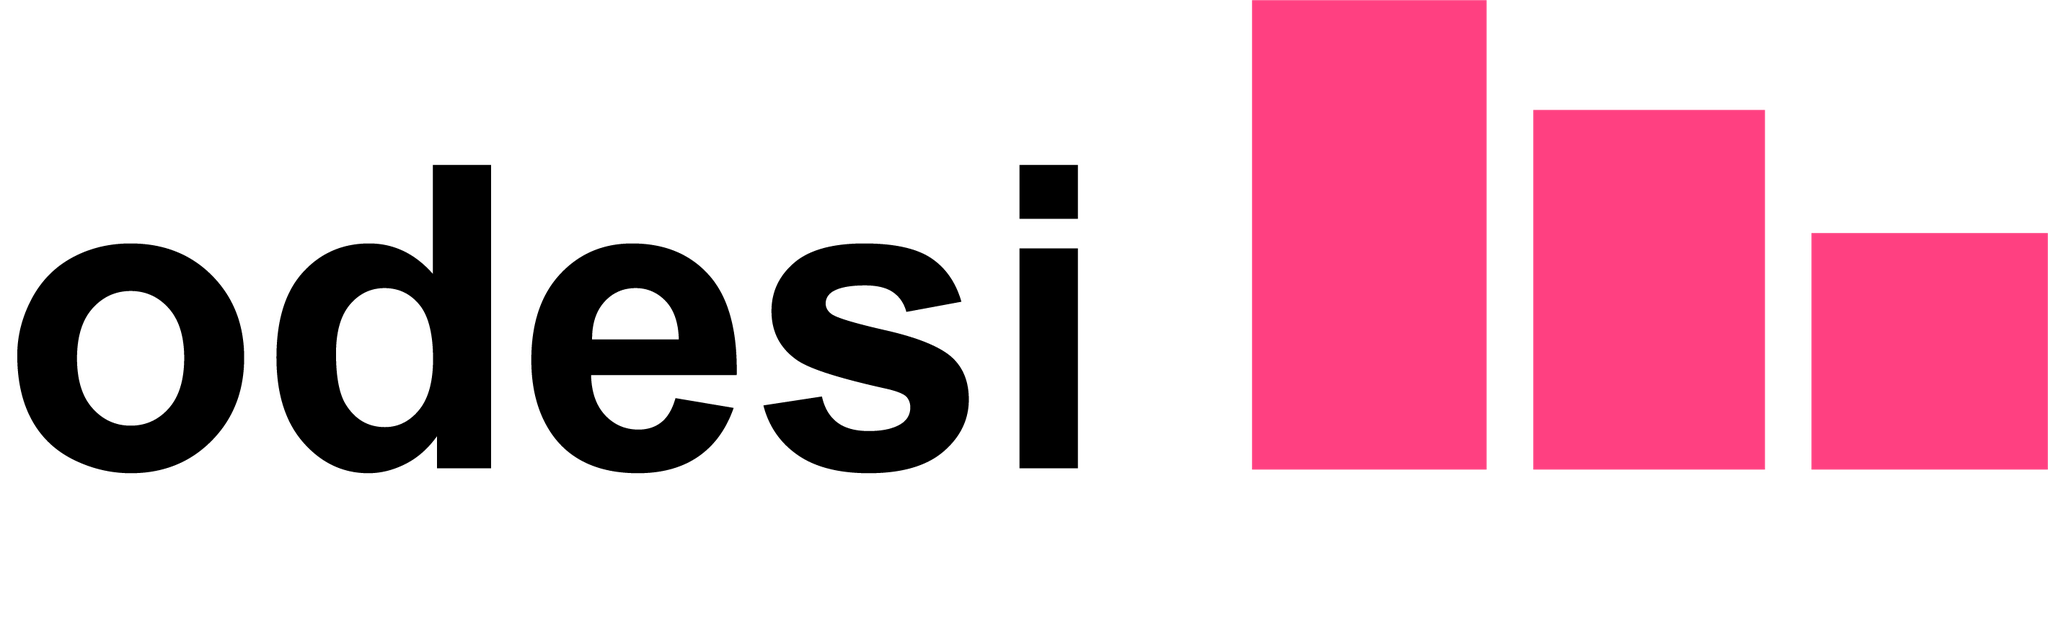 odesi logo - with pink bar graph